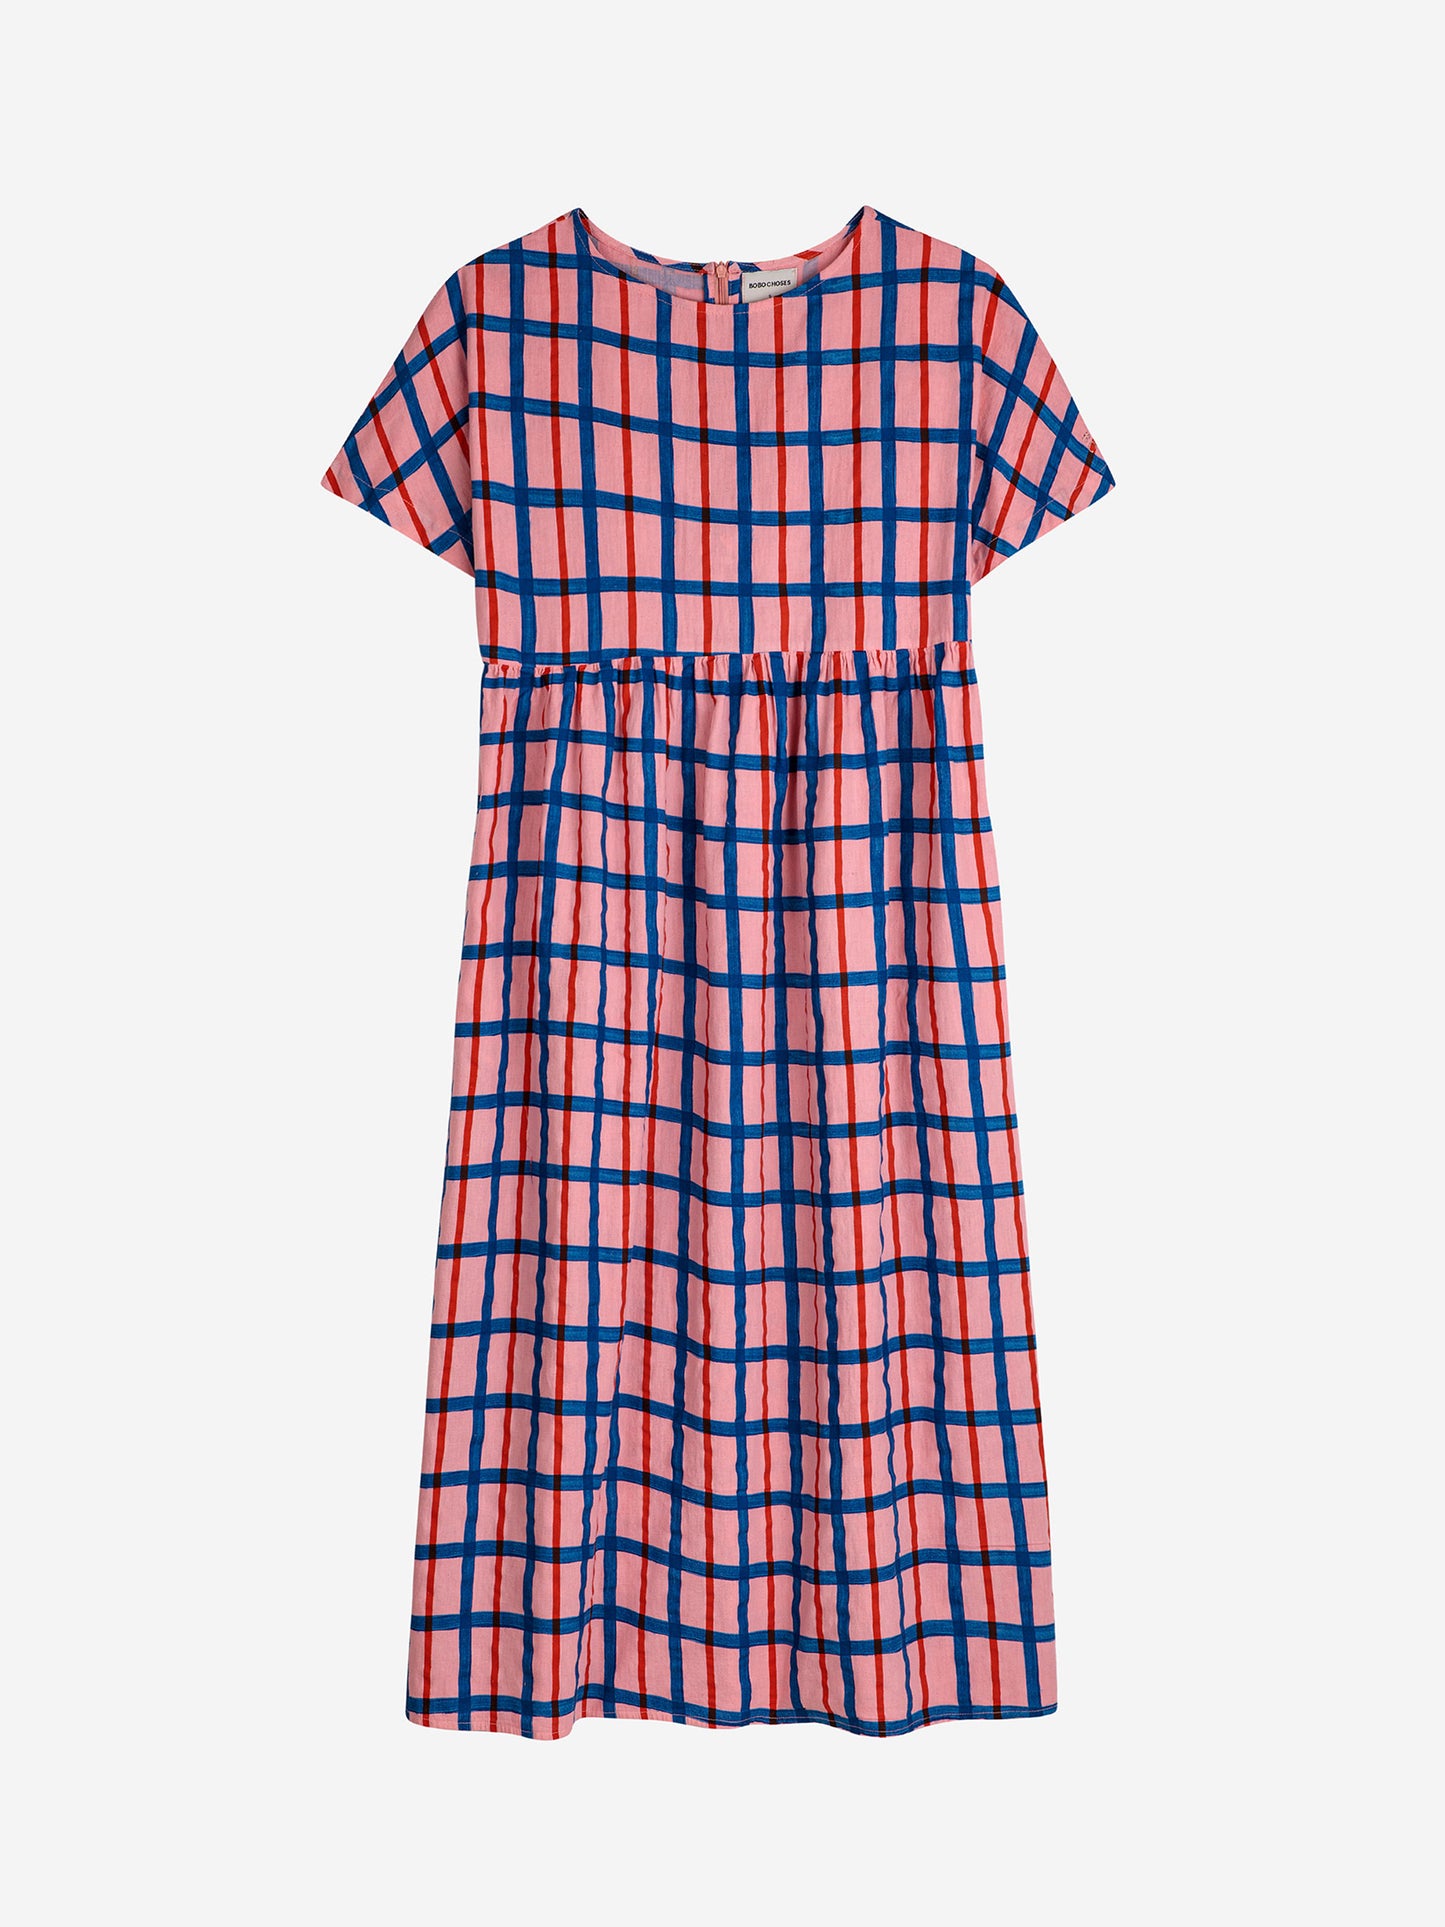 Multicolored checked print dress